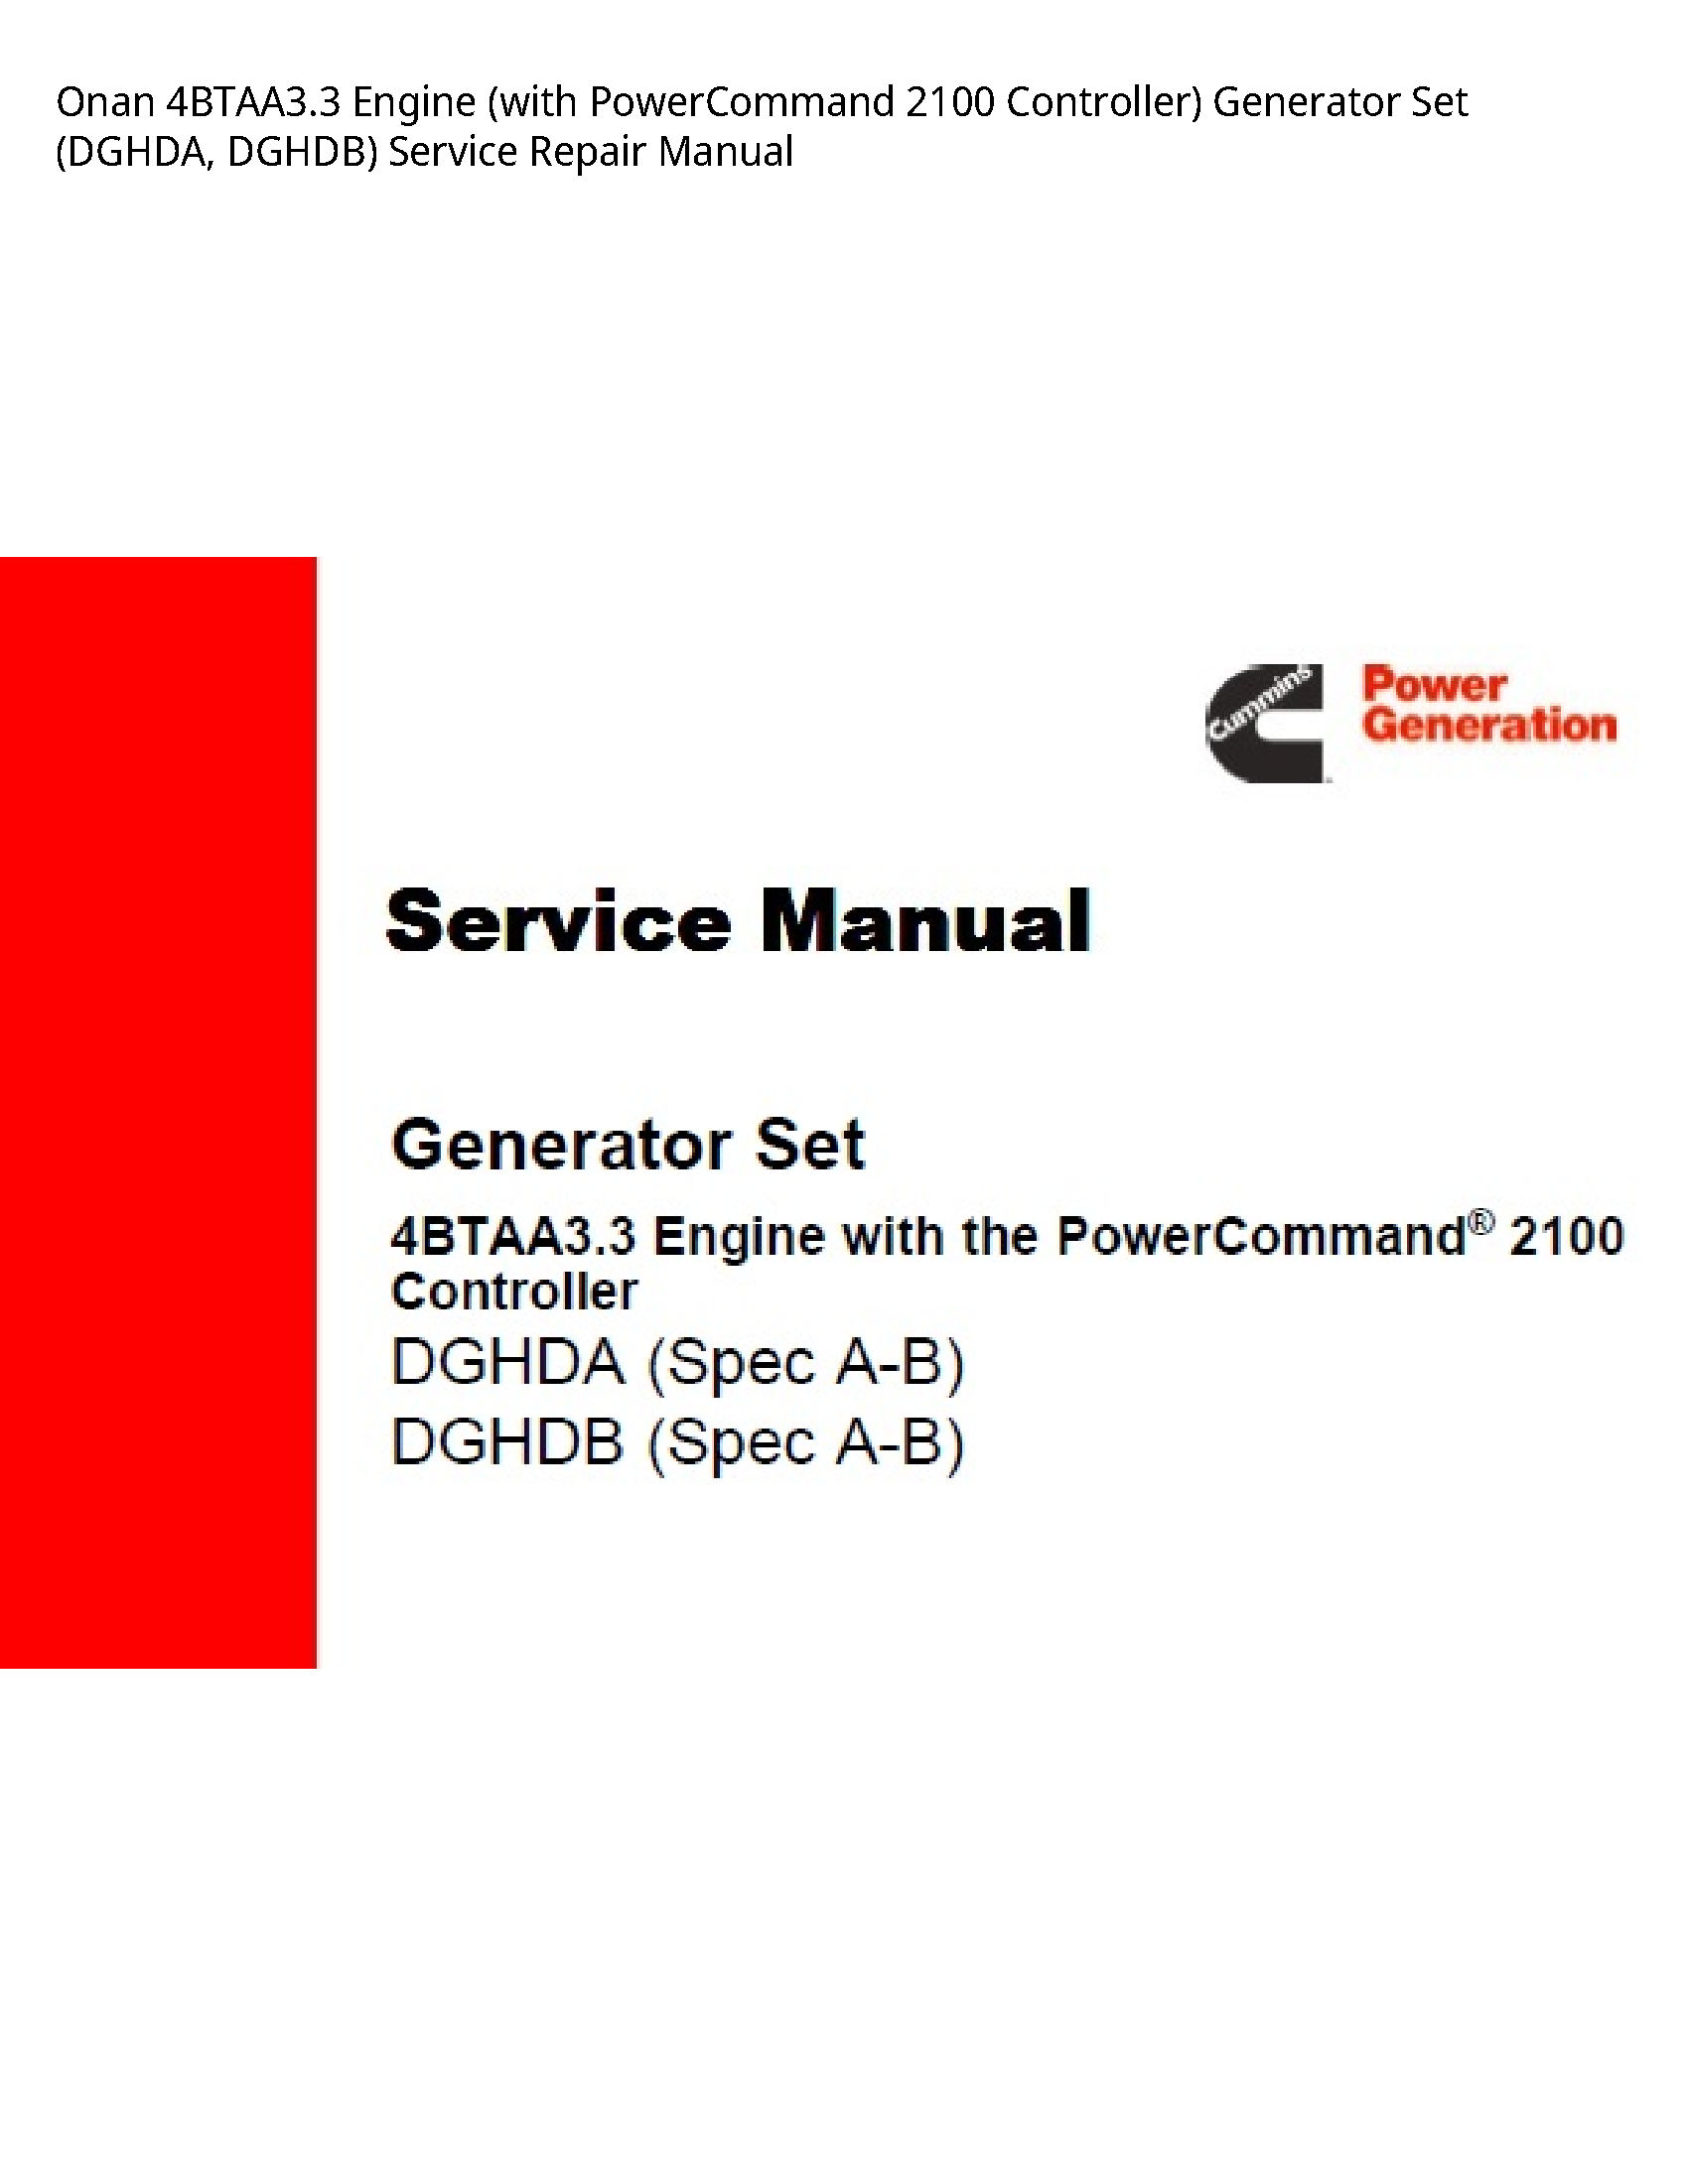 Onan 4BTAA3.3 Engine (with PowerCommand Controller) Generator Set (DGHDA manual